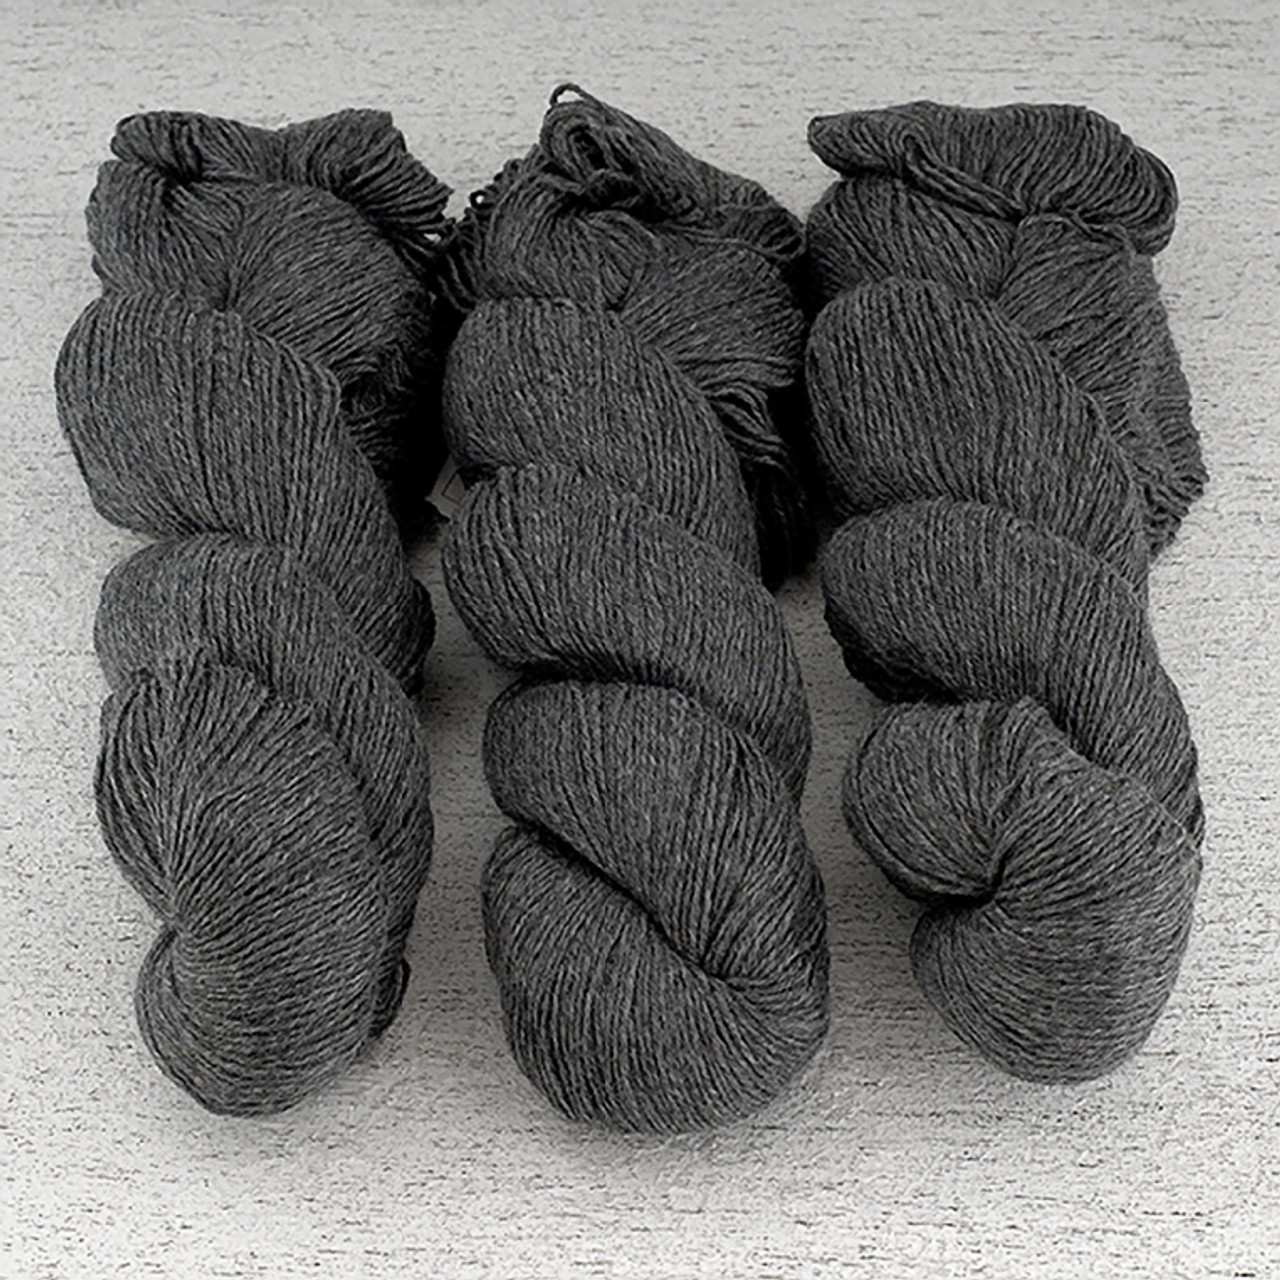 Black and Gray Light Fingering Weight Sock Yarn